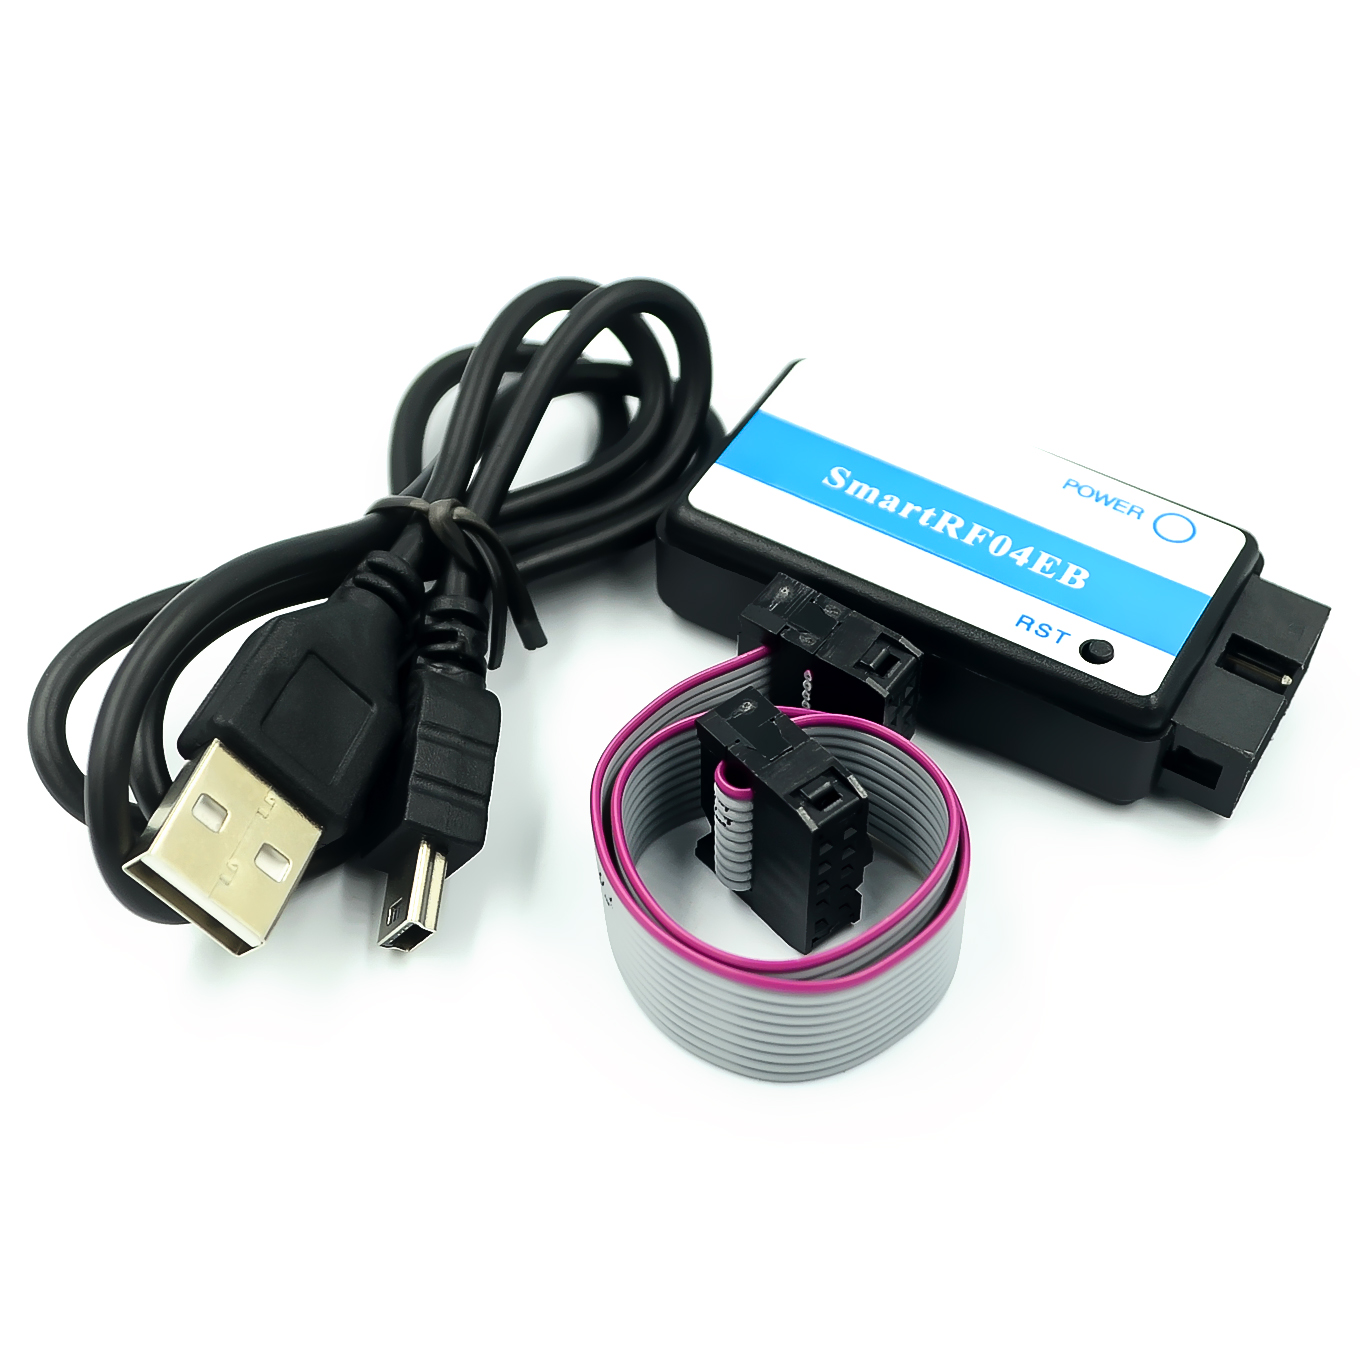 SmartRF04EB CC1110 CC2530 ZigBee Module USB Downloader Emulator MCU NEW